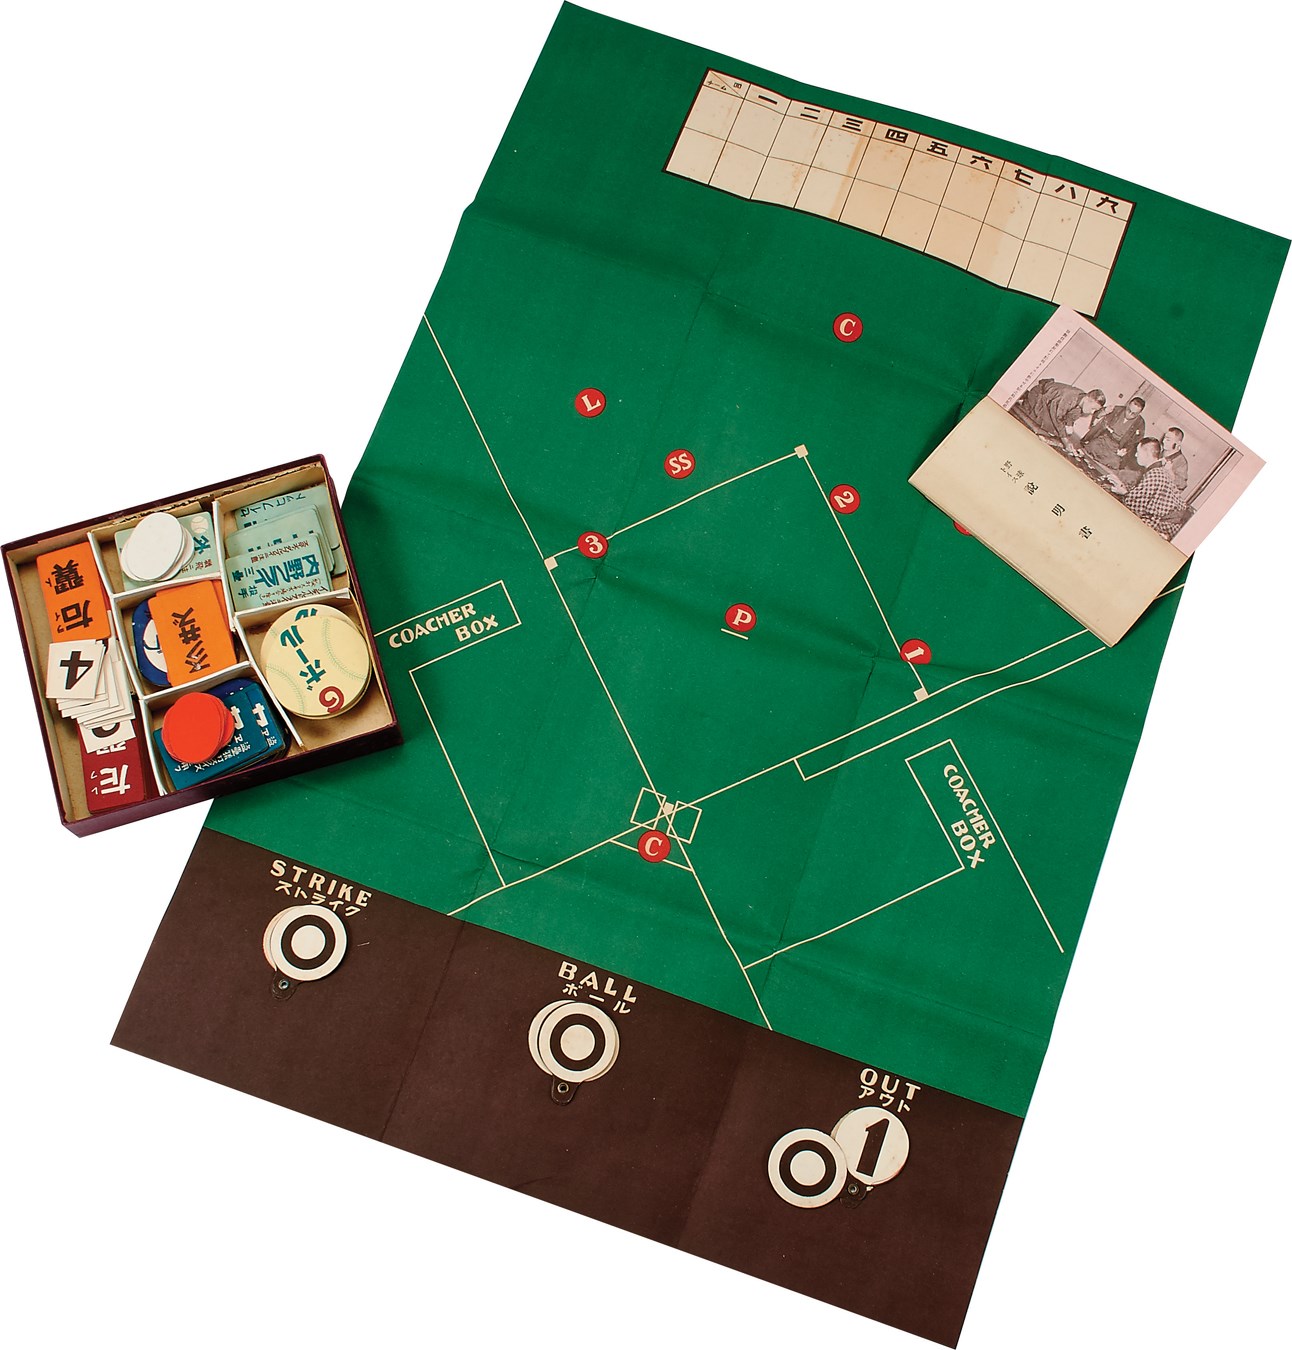 Negro League, Latin, Japanese & Int'l Baseball - 1930s "Ideal Luxury" Japanese Baseball Game in Original Box Complete